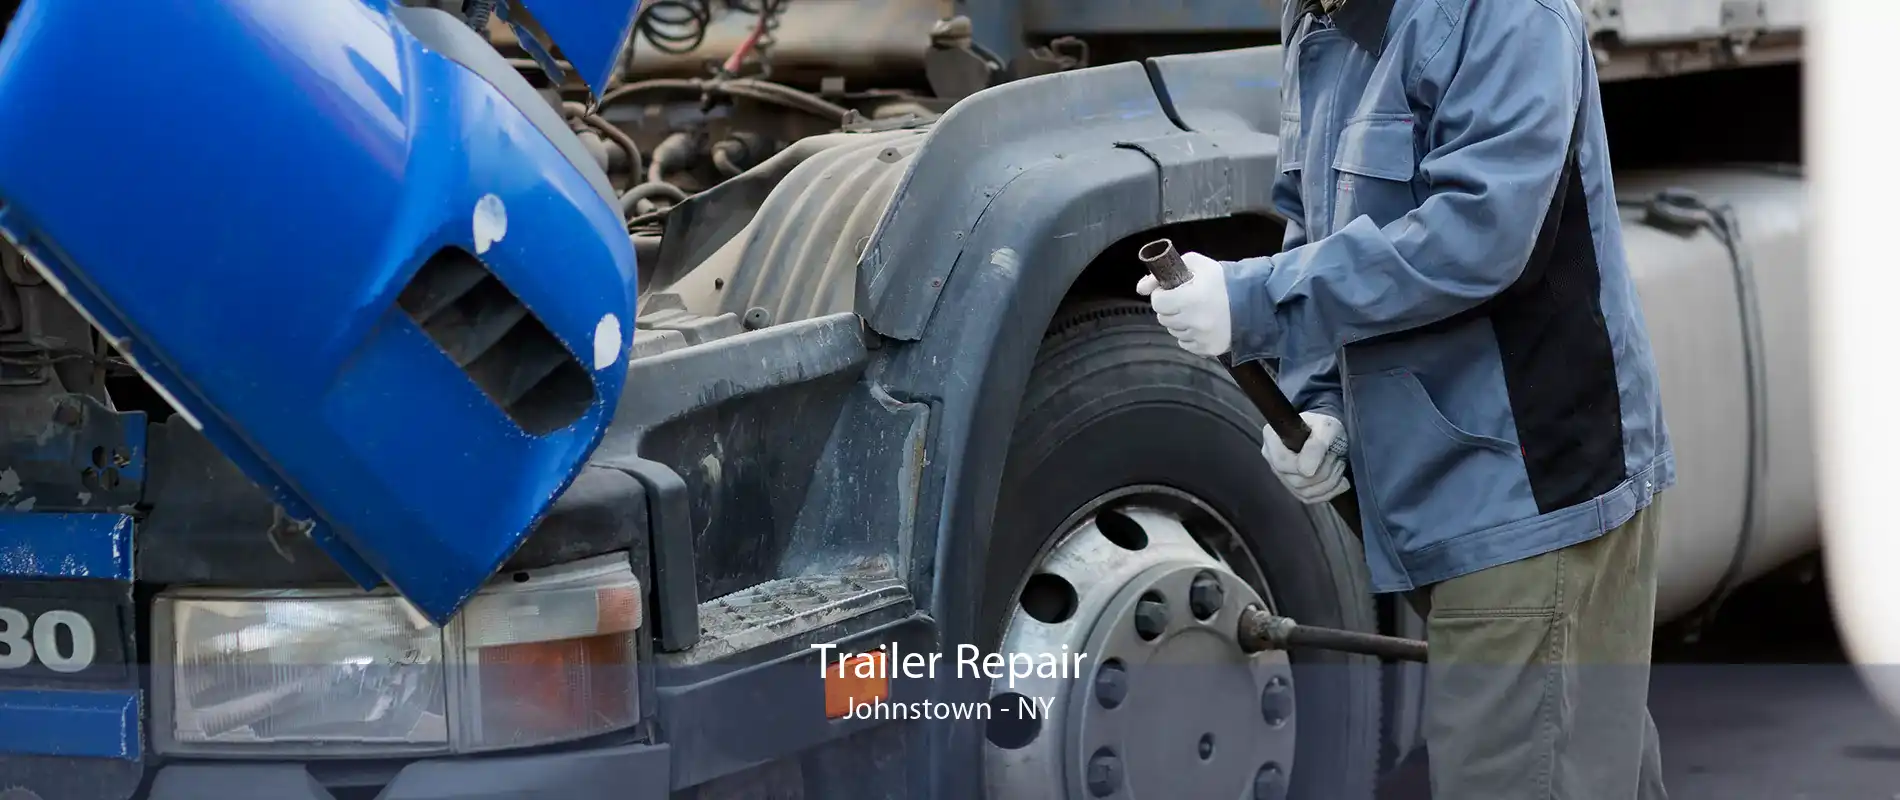 Trailer Repair Johnstown - NY